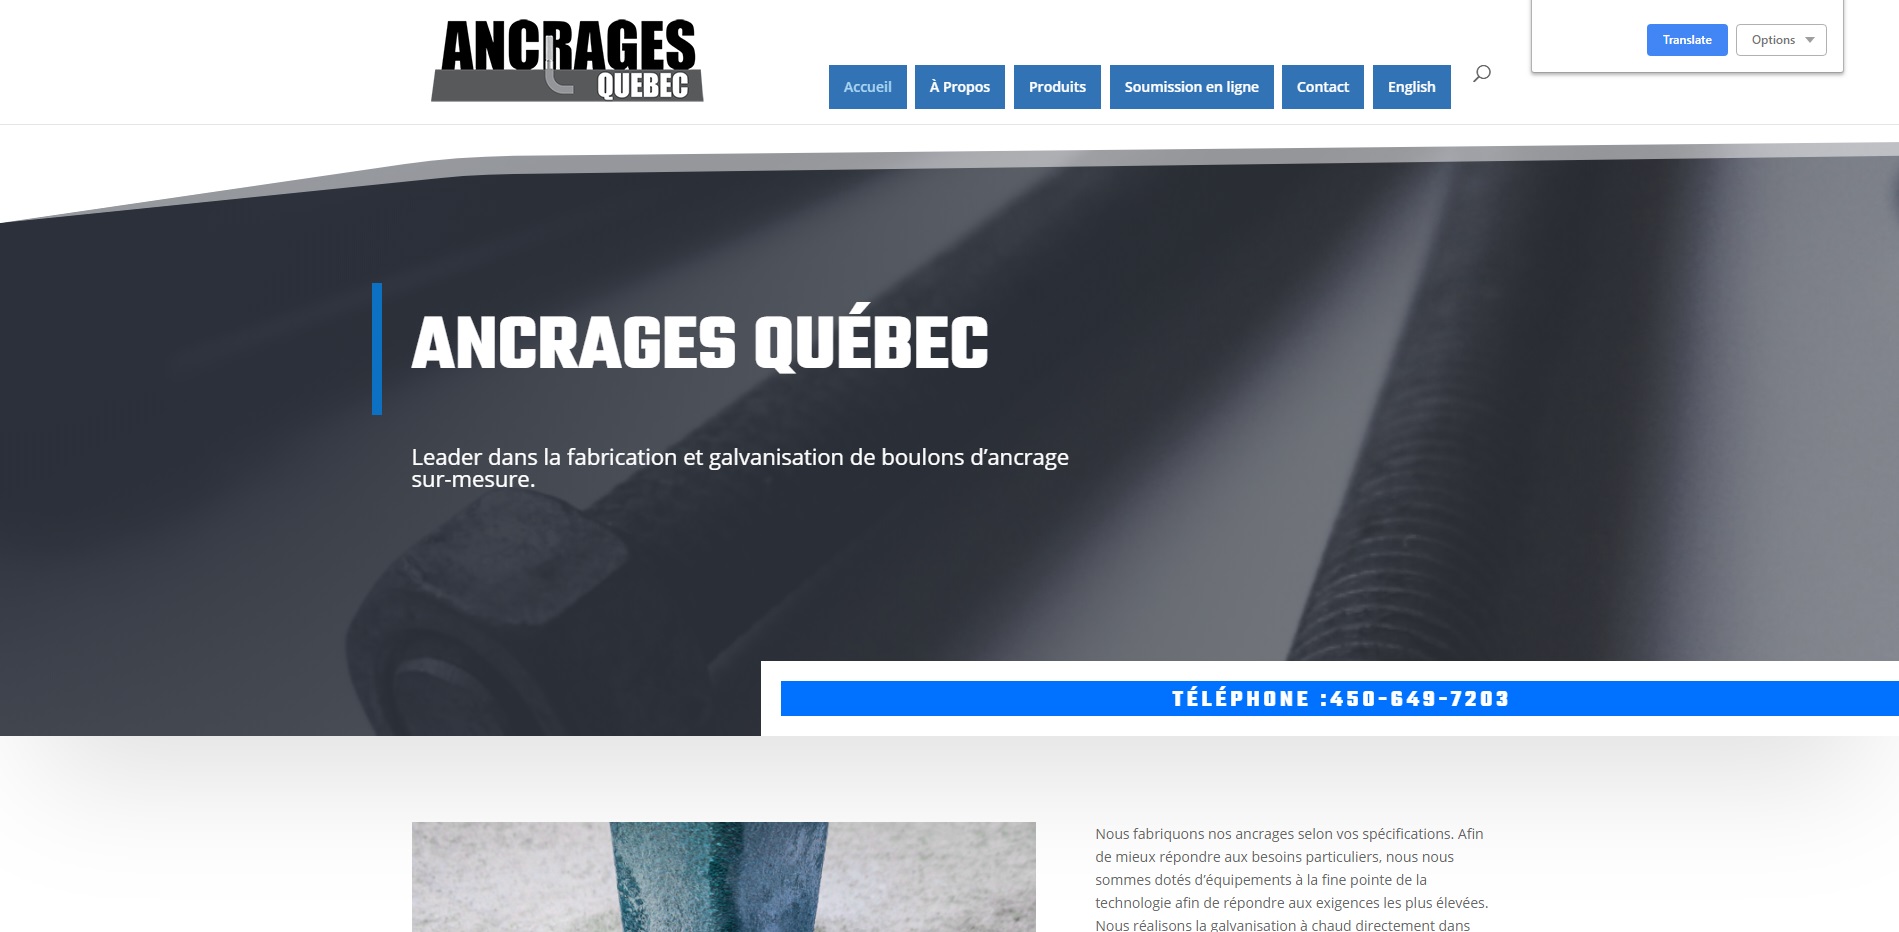 Ancrages Quebec